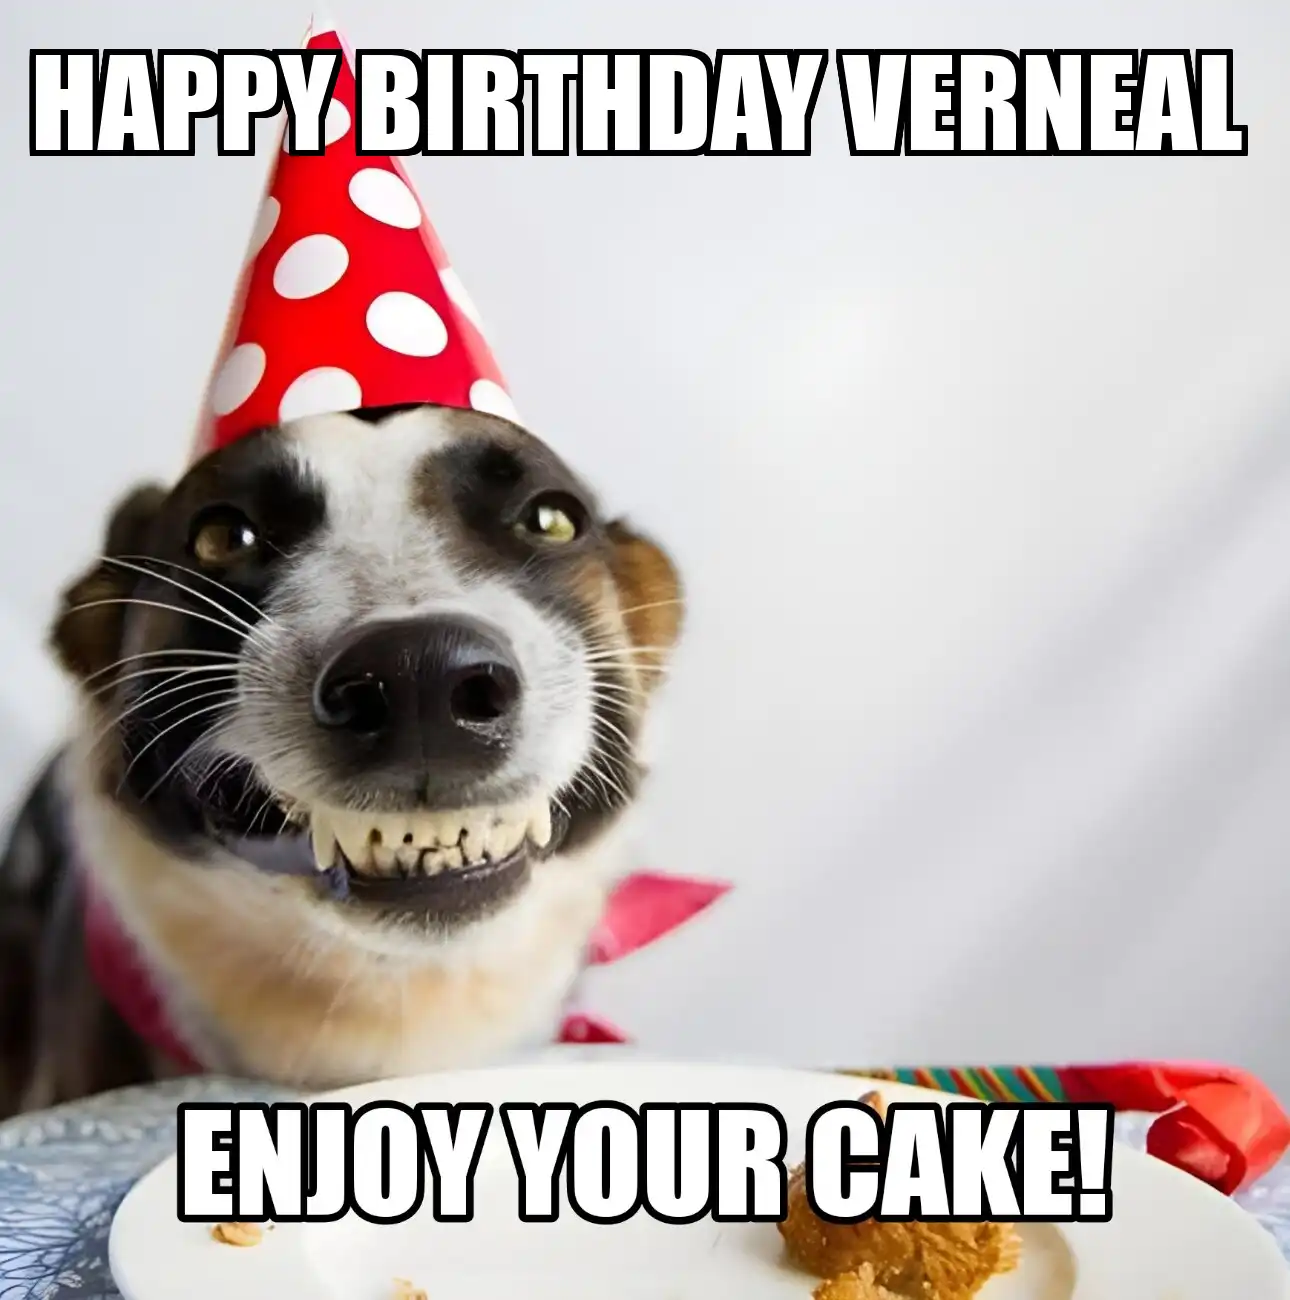 Happy Birthday Verneal Enjoy Your Cake Dog Meme